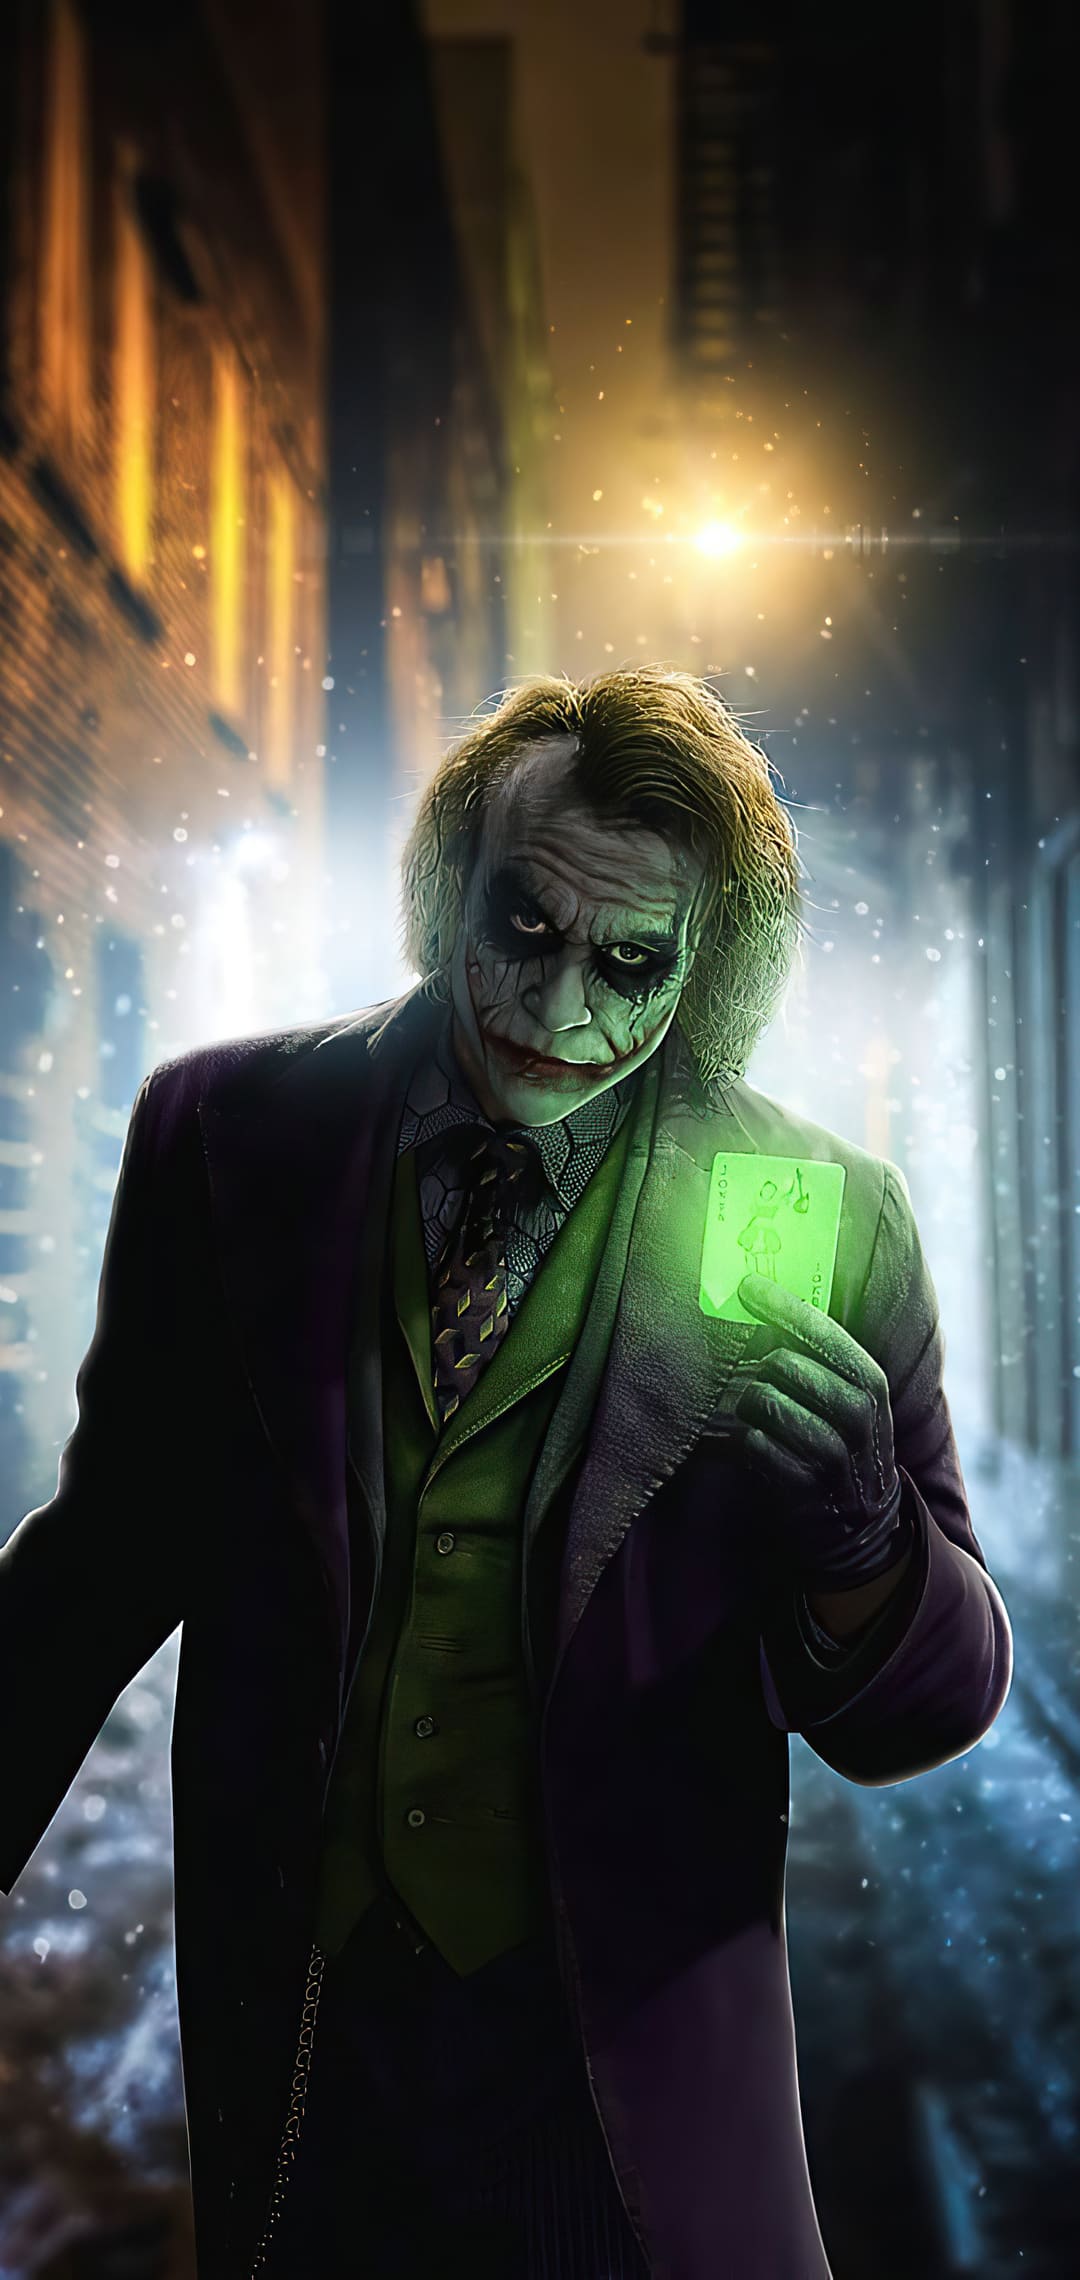 Joker Wallpaper 2021